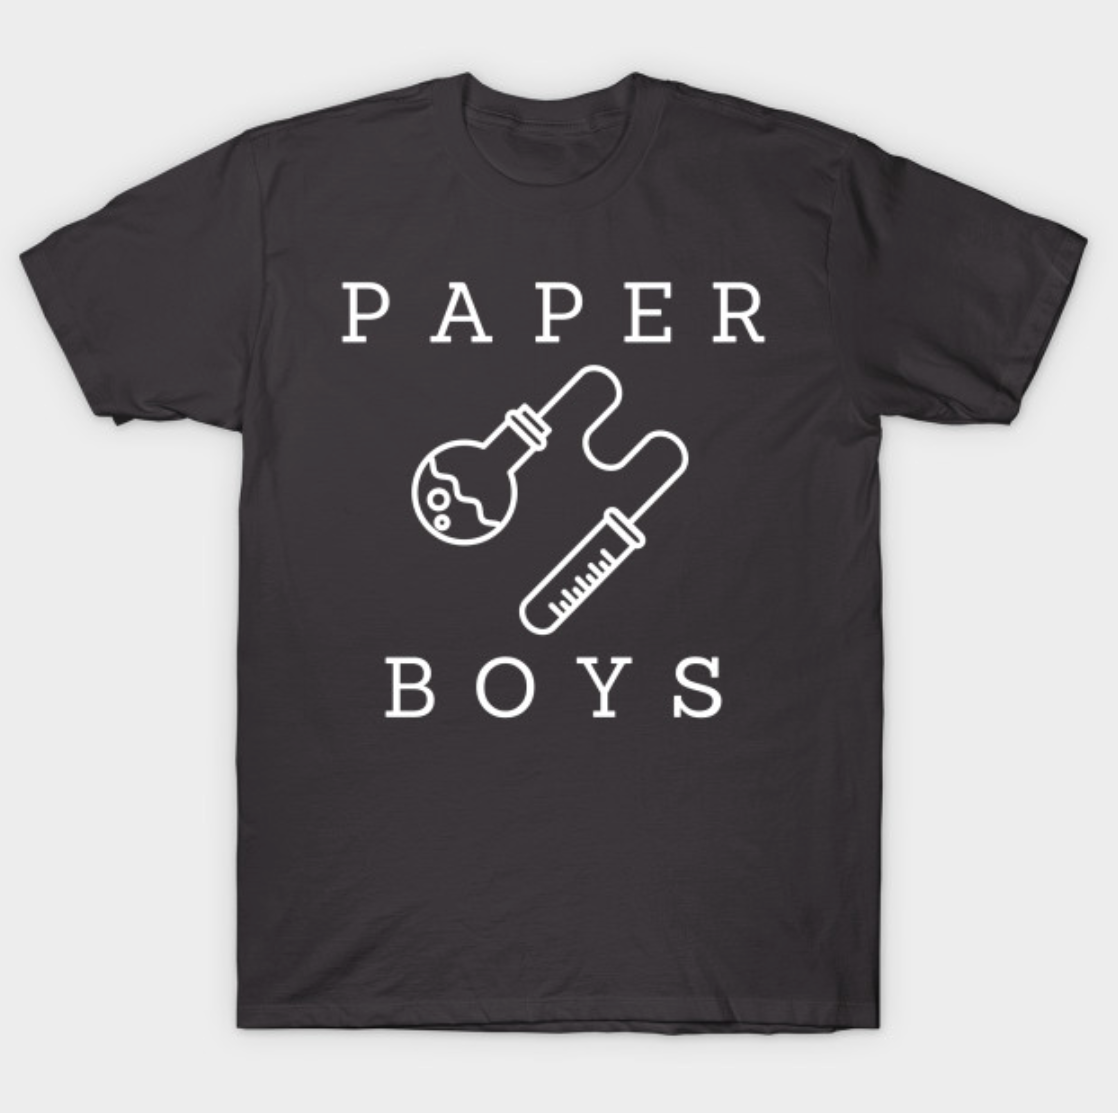 Paper Boys shirt